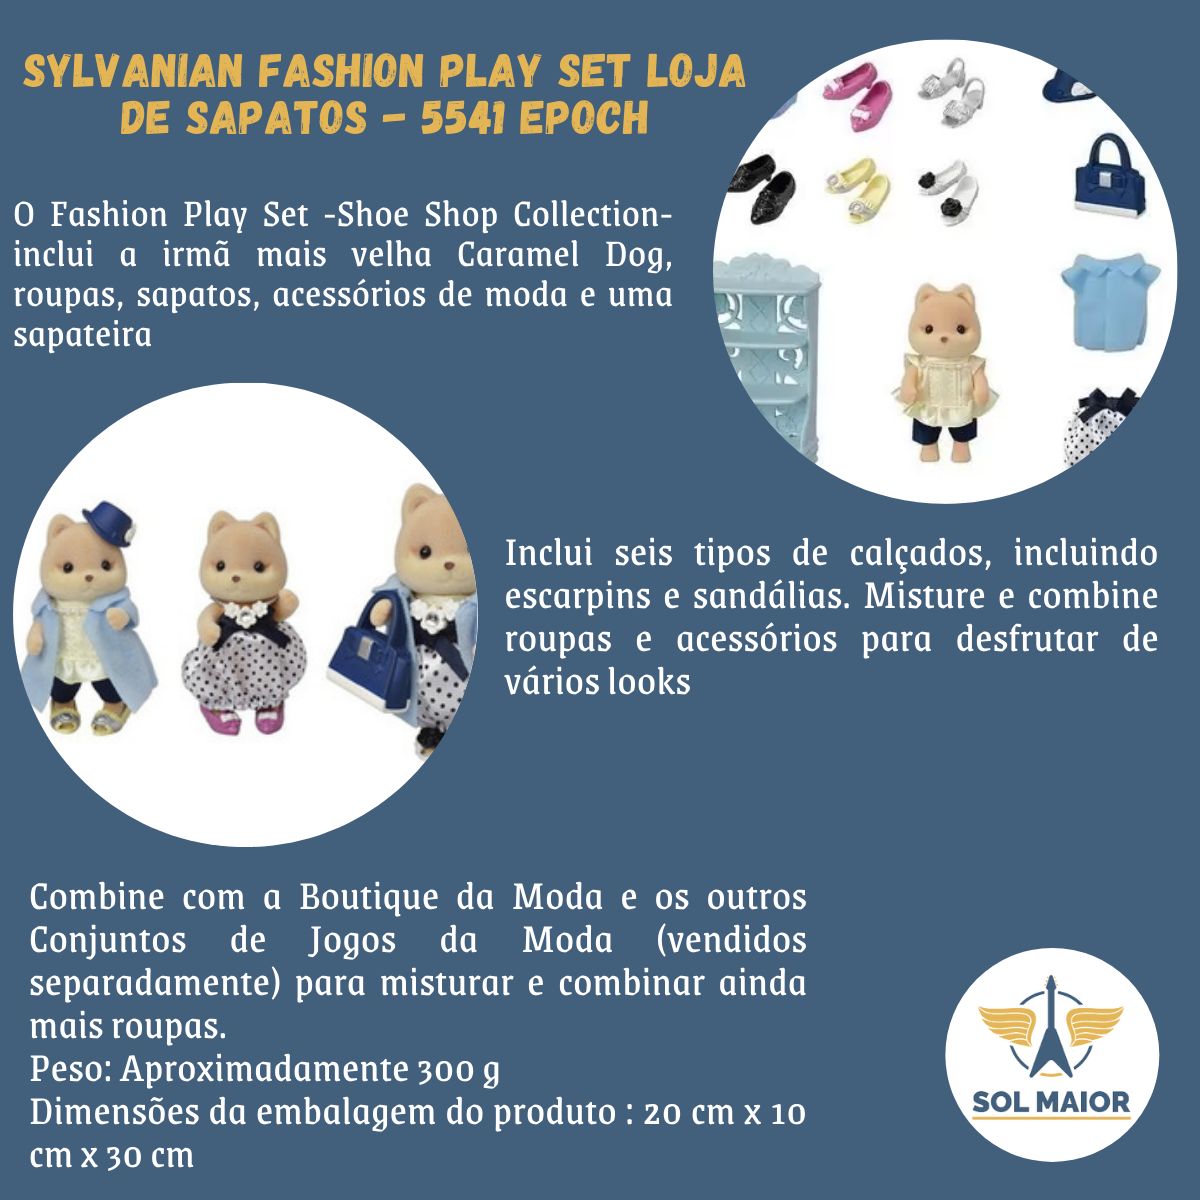 Sylvanian Fashion Play Set Loja De Sapatos - 5541 Epoch - Grupo Solmaior